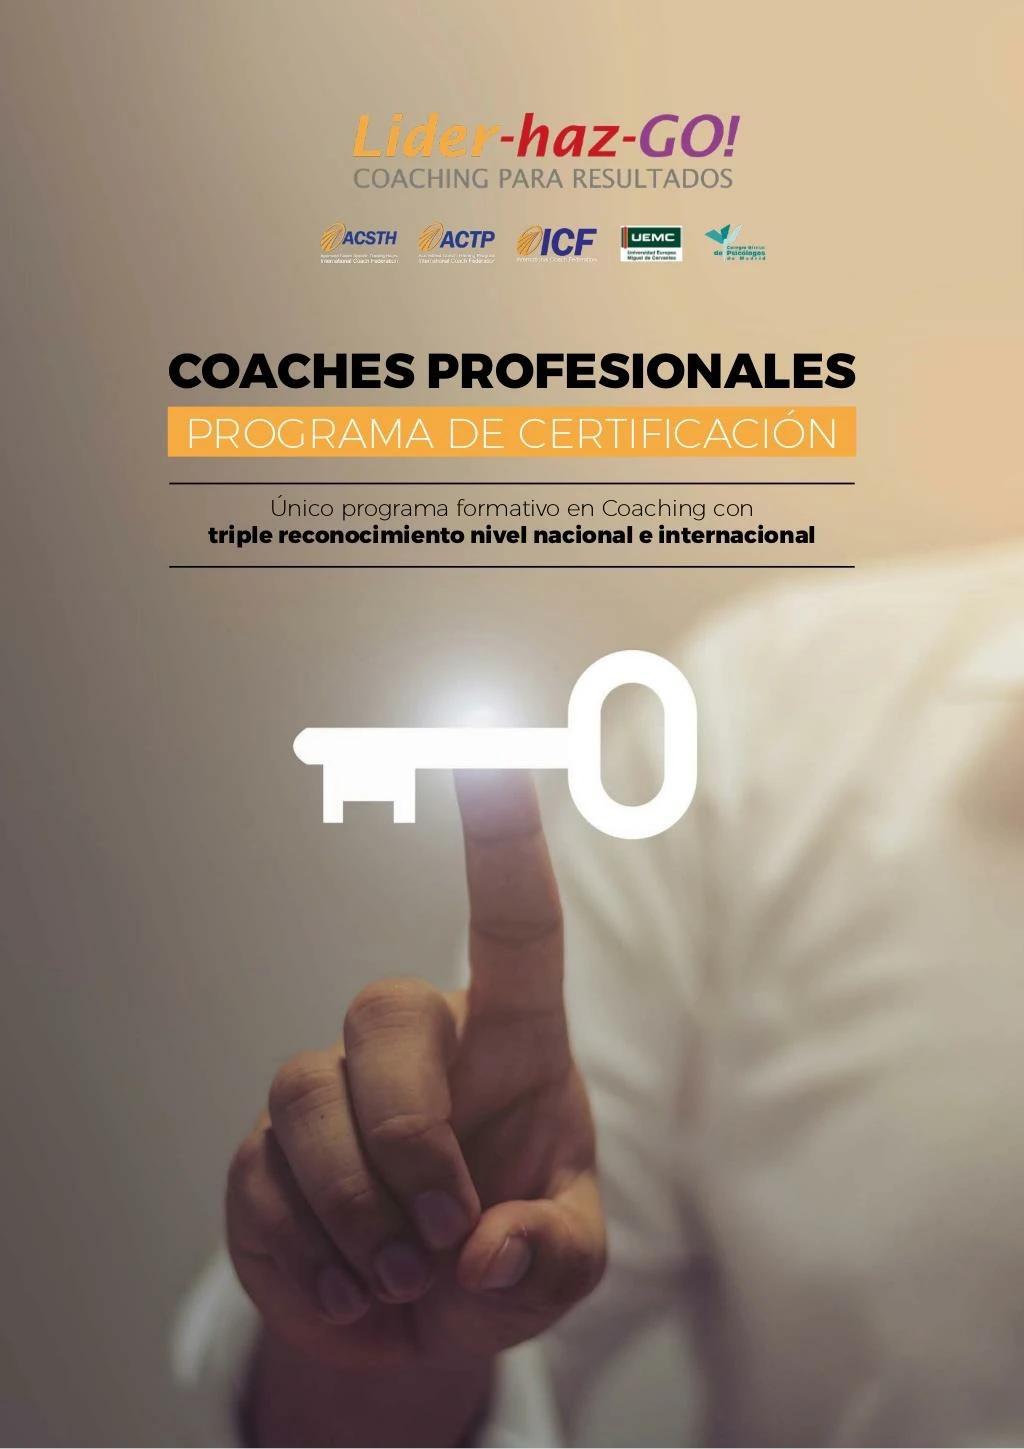 formaci n en coaching excelencia en la certificaci n como coach profesional